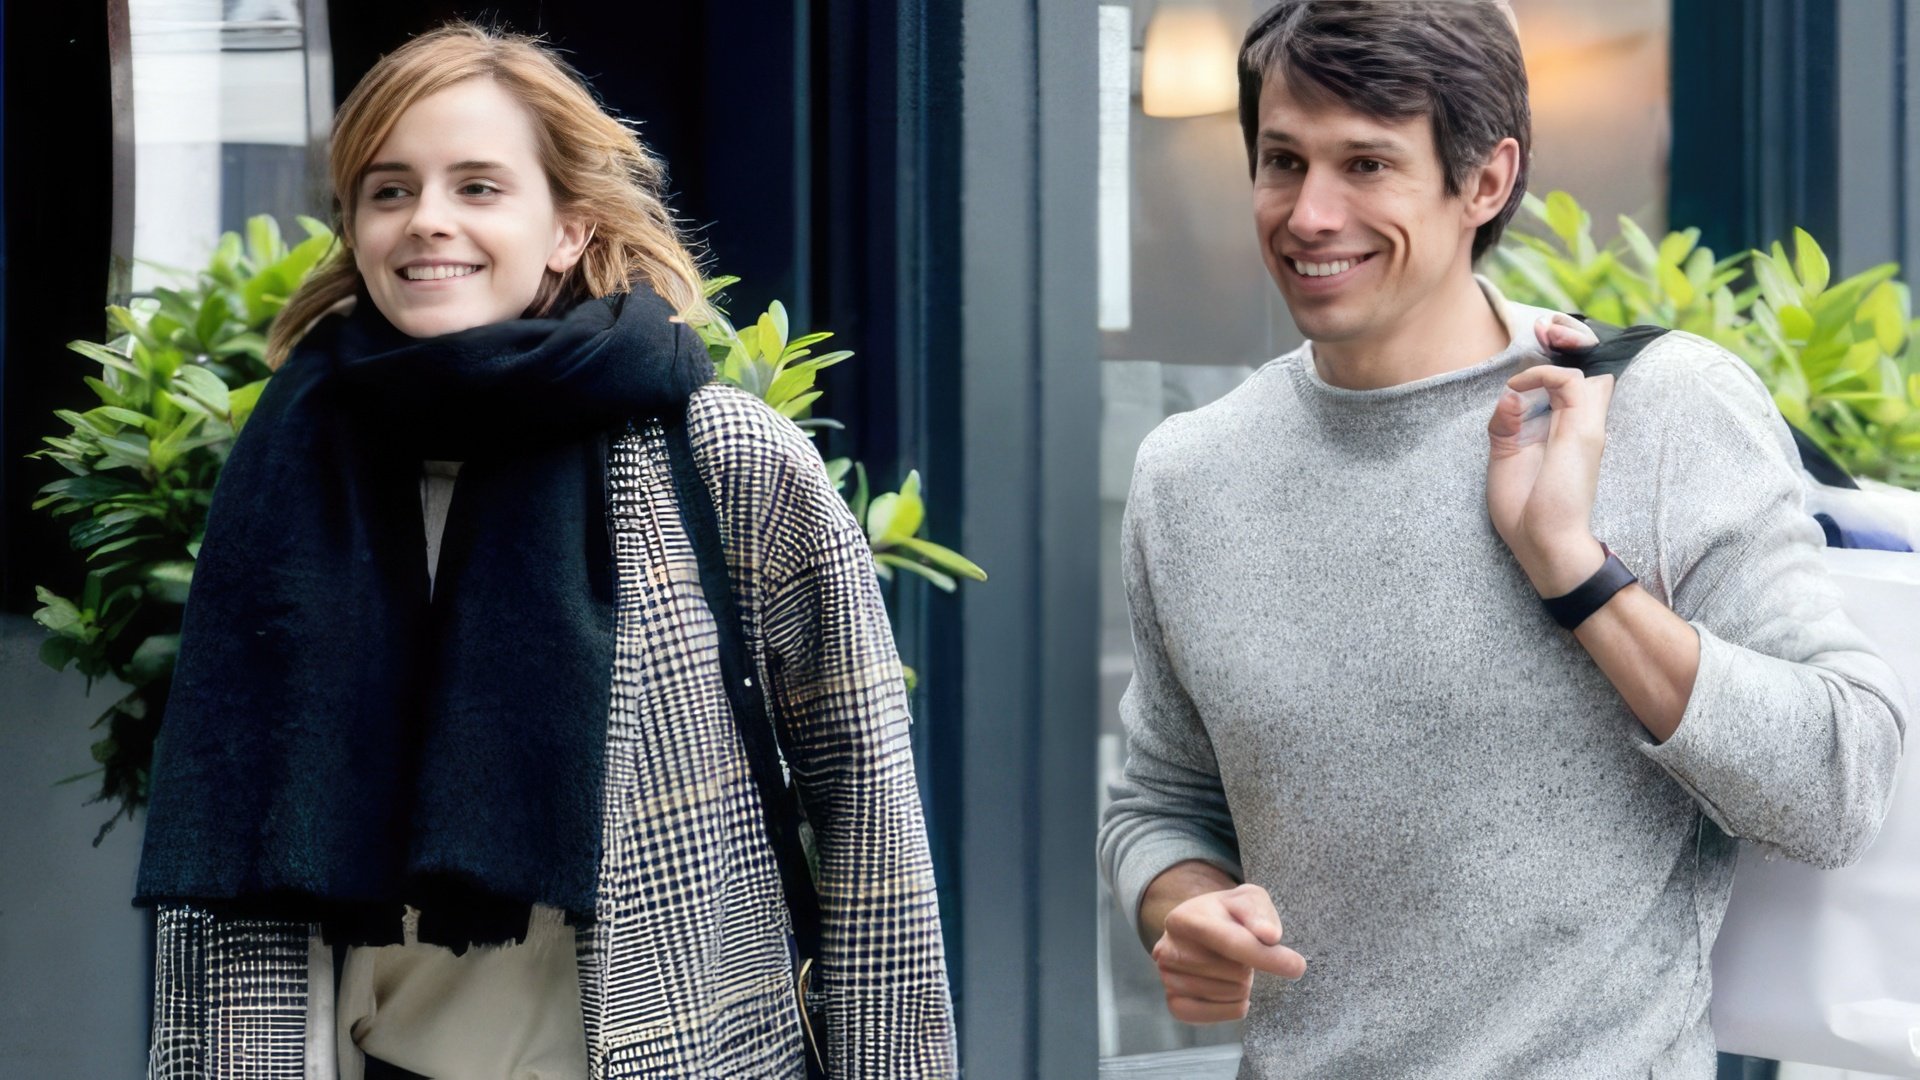 In 2016, Emma Watson dated William Knight